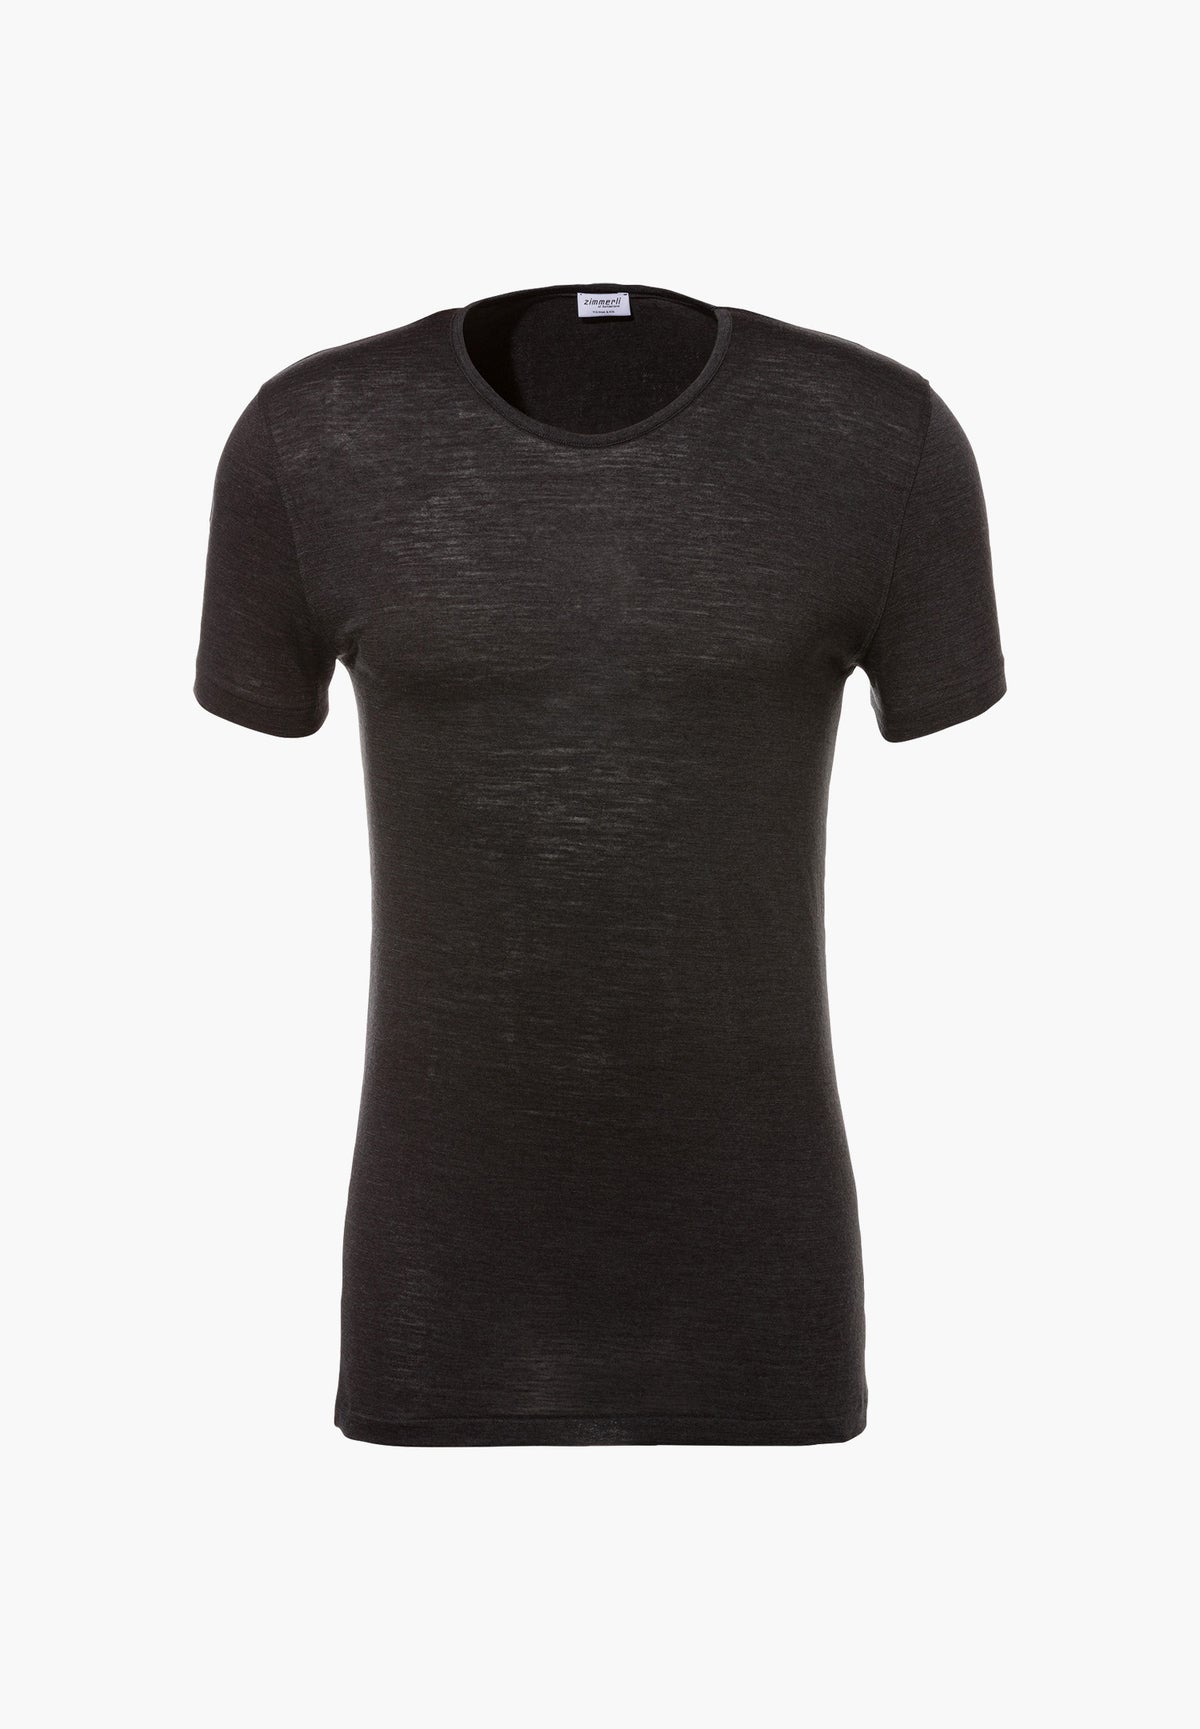 Wool &amp; Silk | T-Shirt Short Sleeve - charcoal